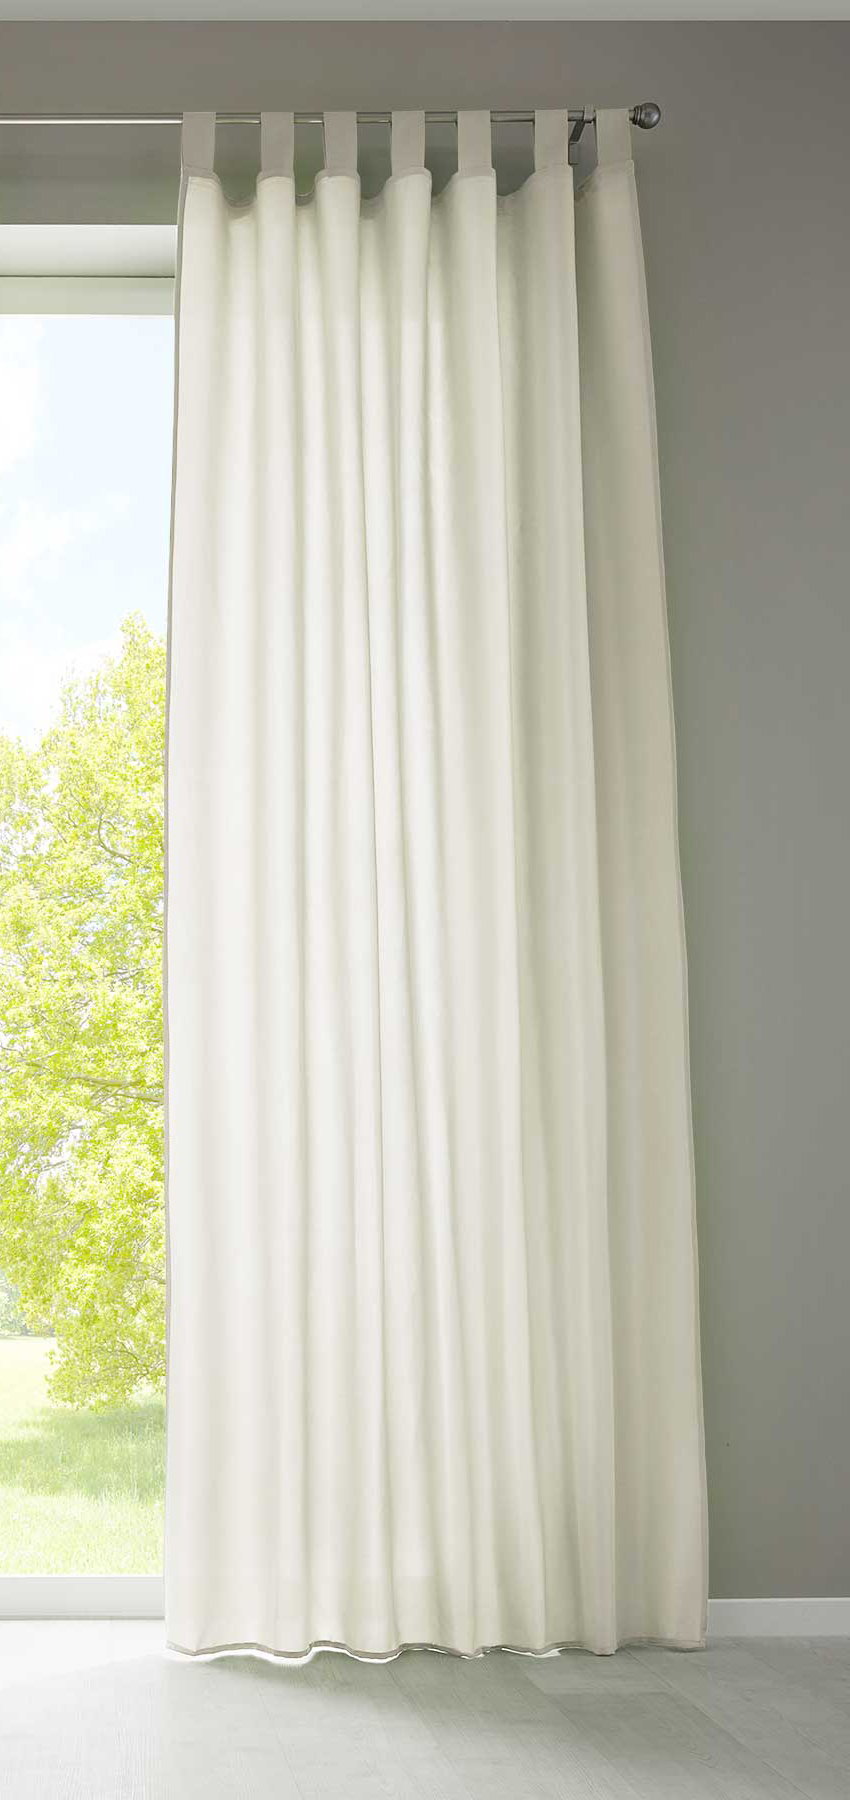 Blickdichter Vorhang «Analisa», 240 x 135 cm